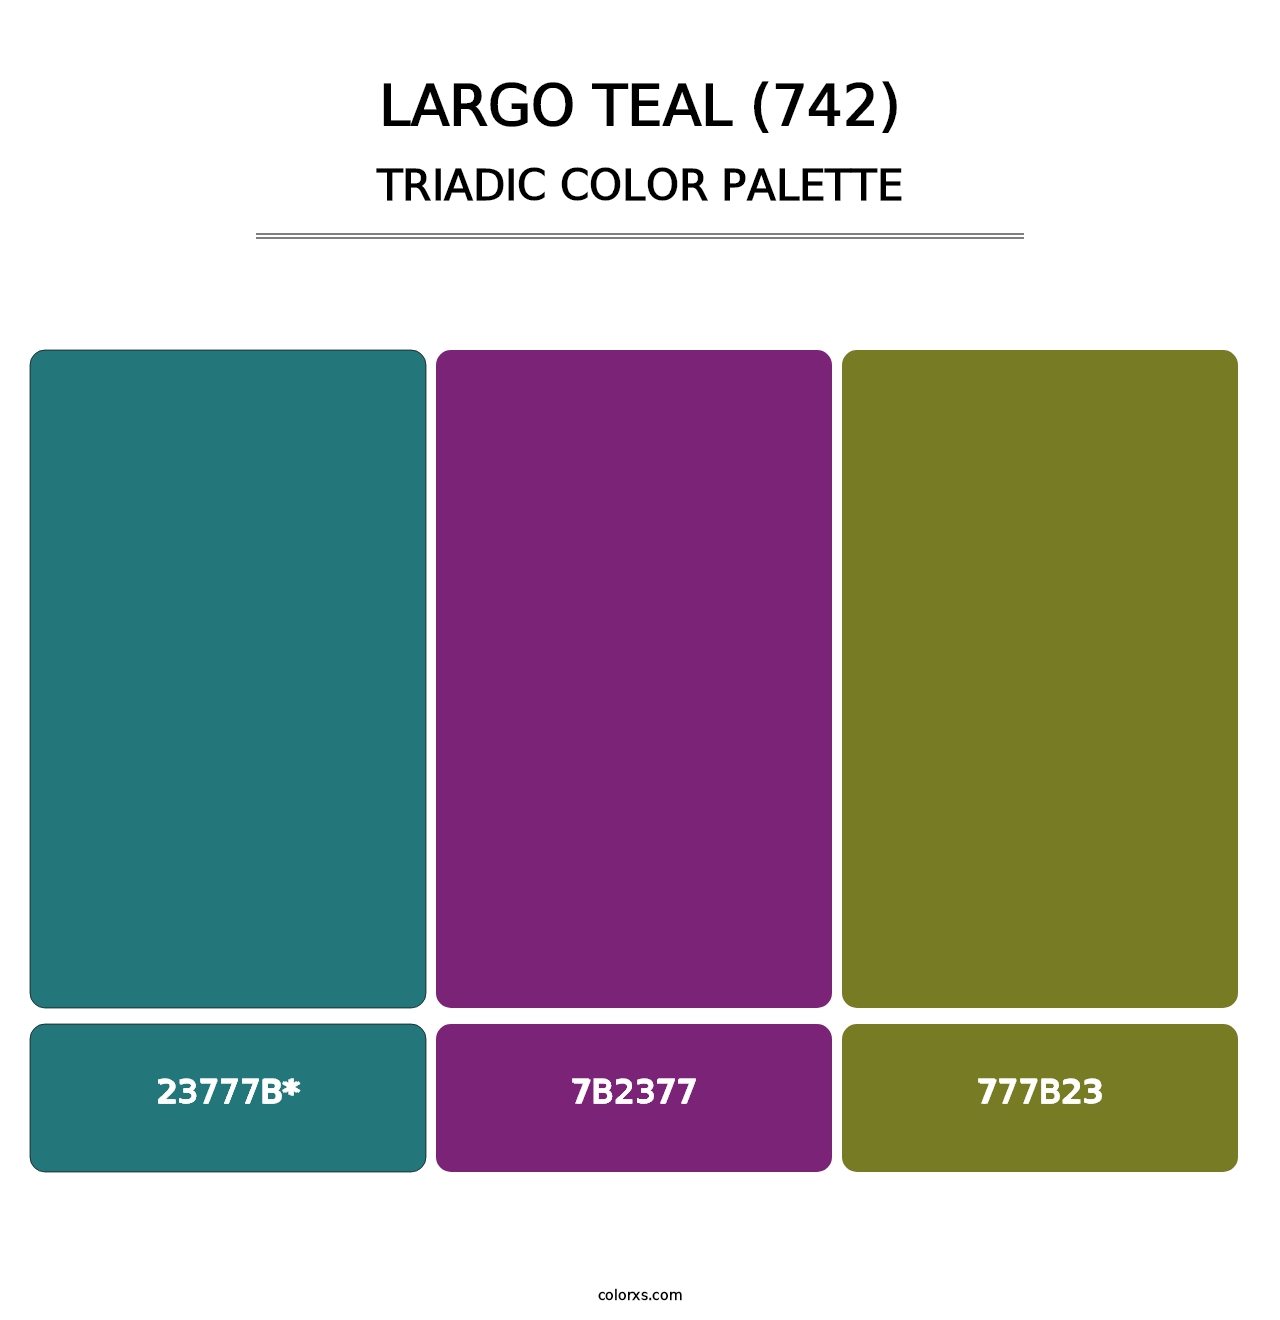 Largo Teal (742) - Triadic Color Palette